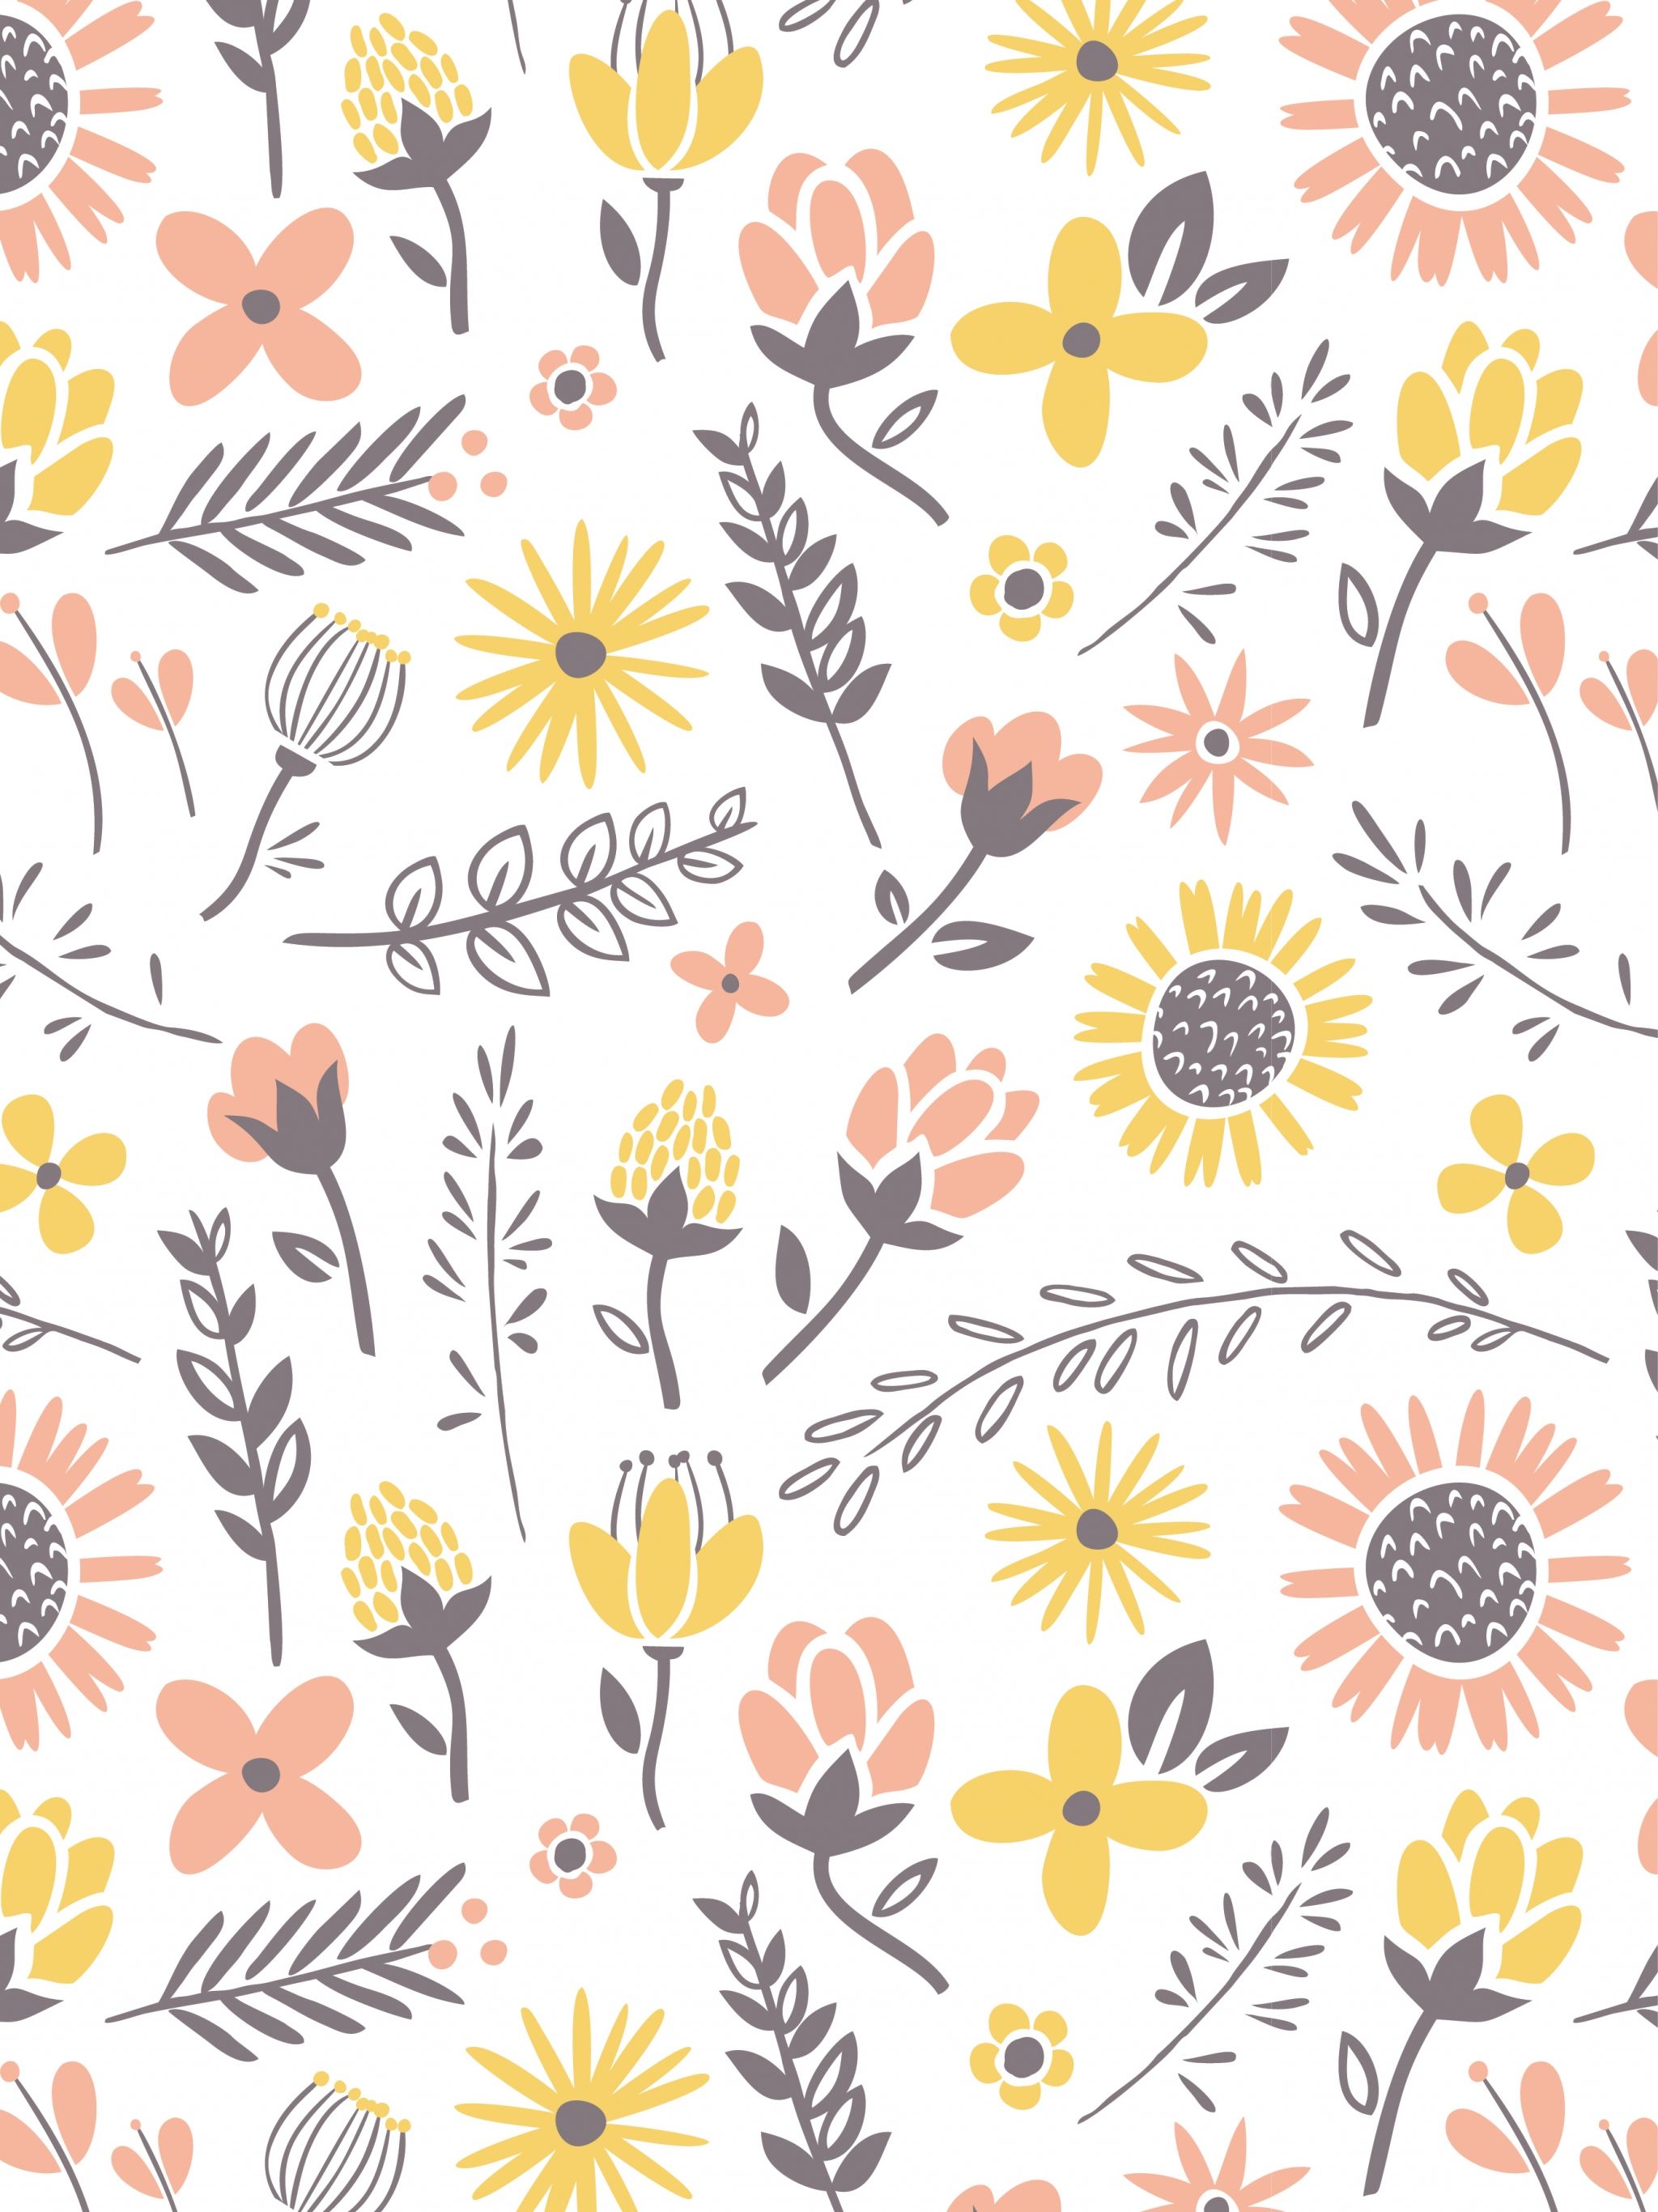 Free download flowers iphone wallpaper Cute patterns phone